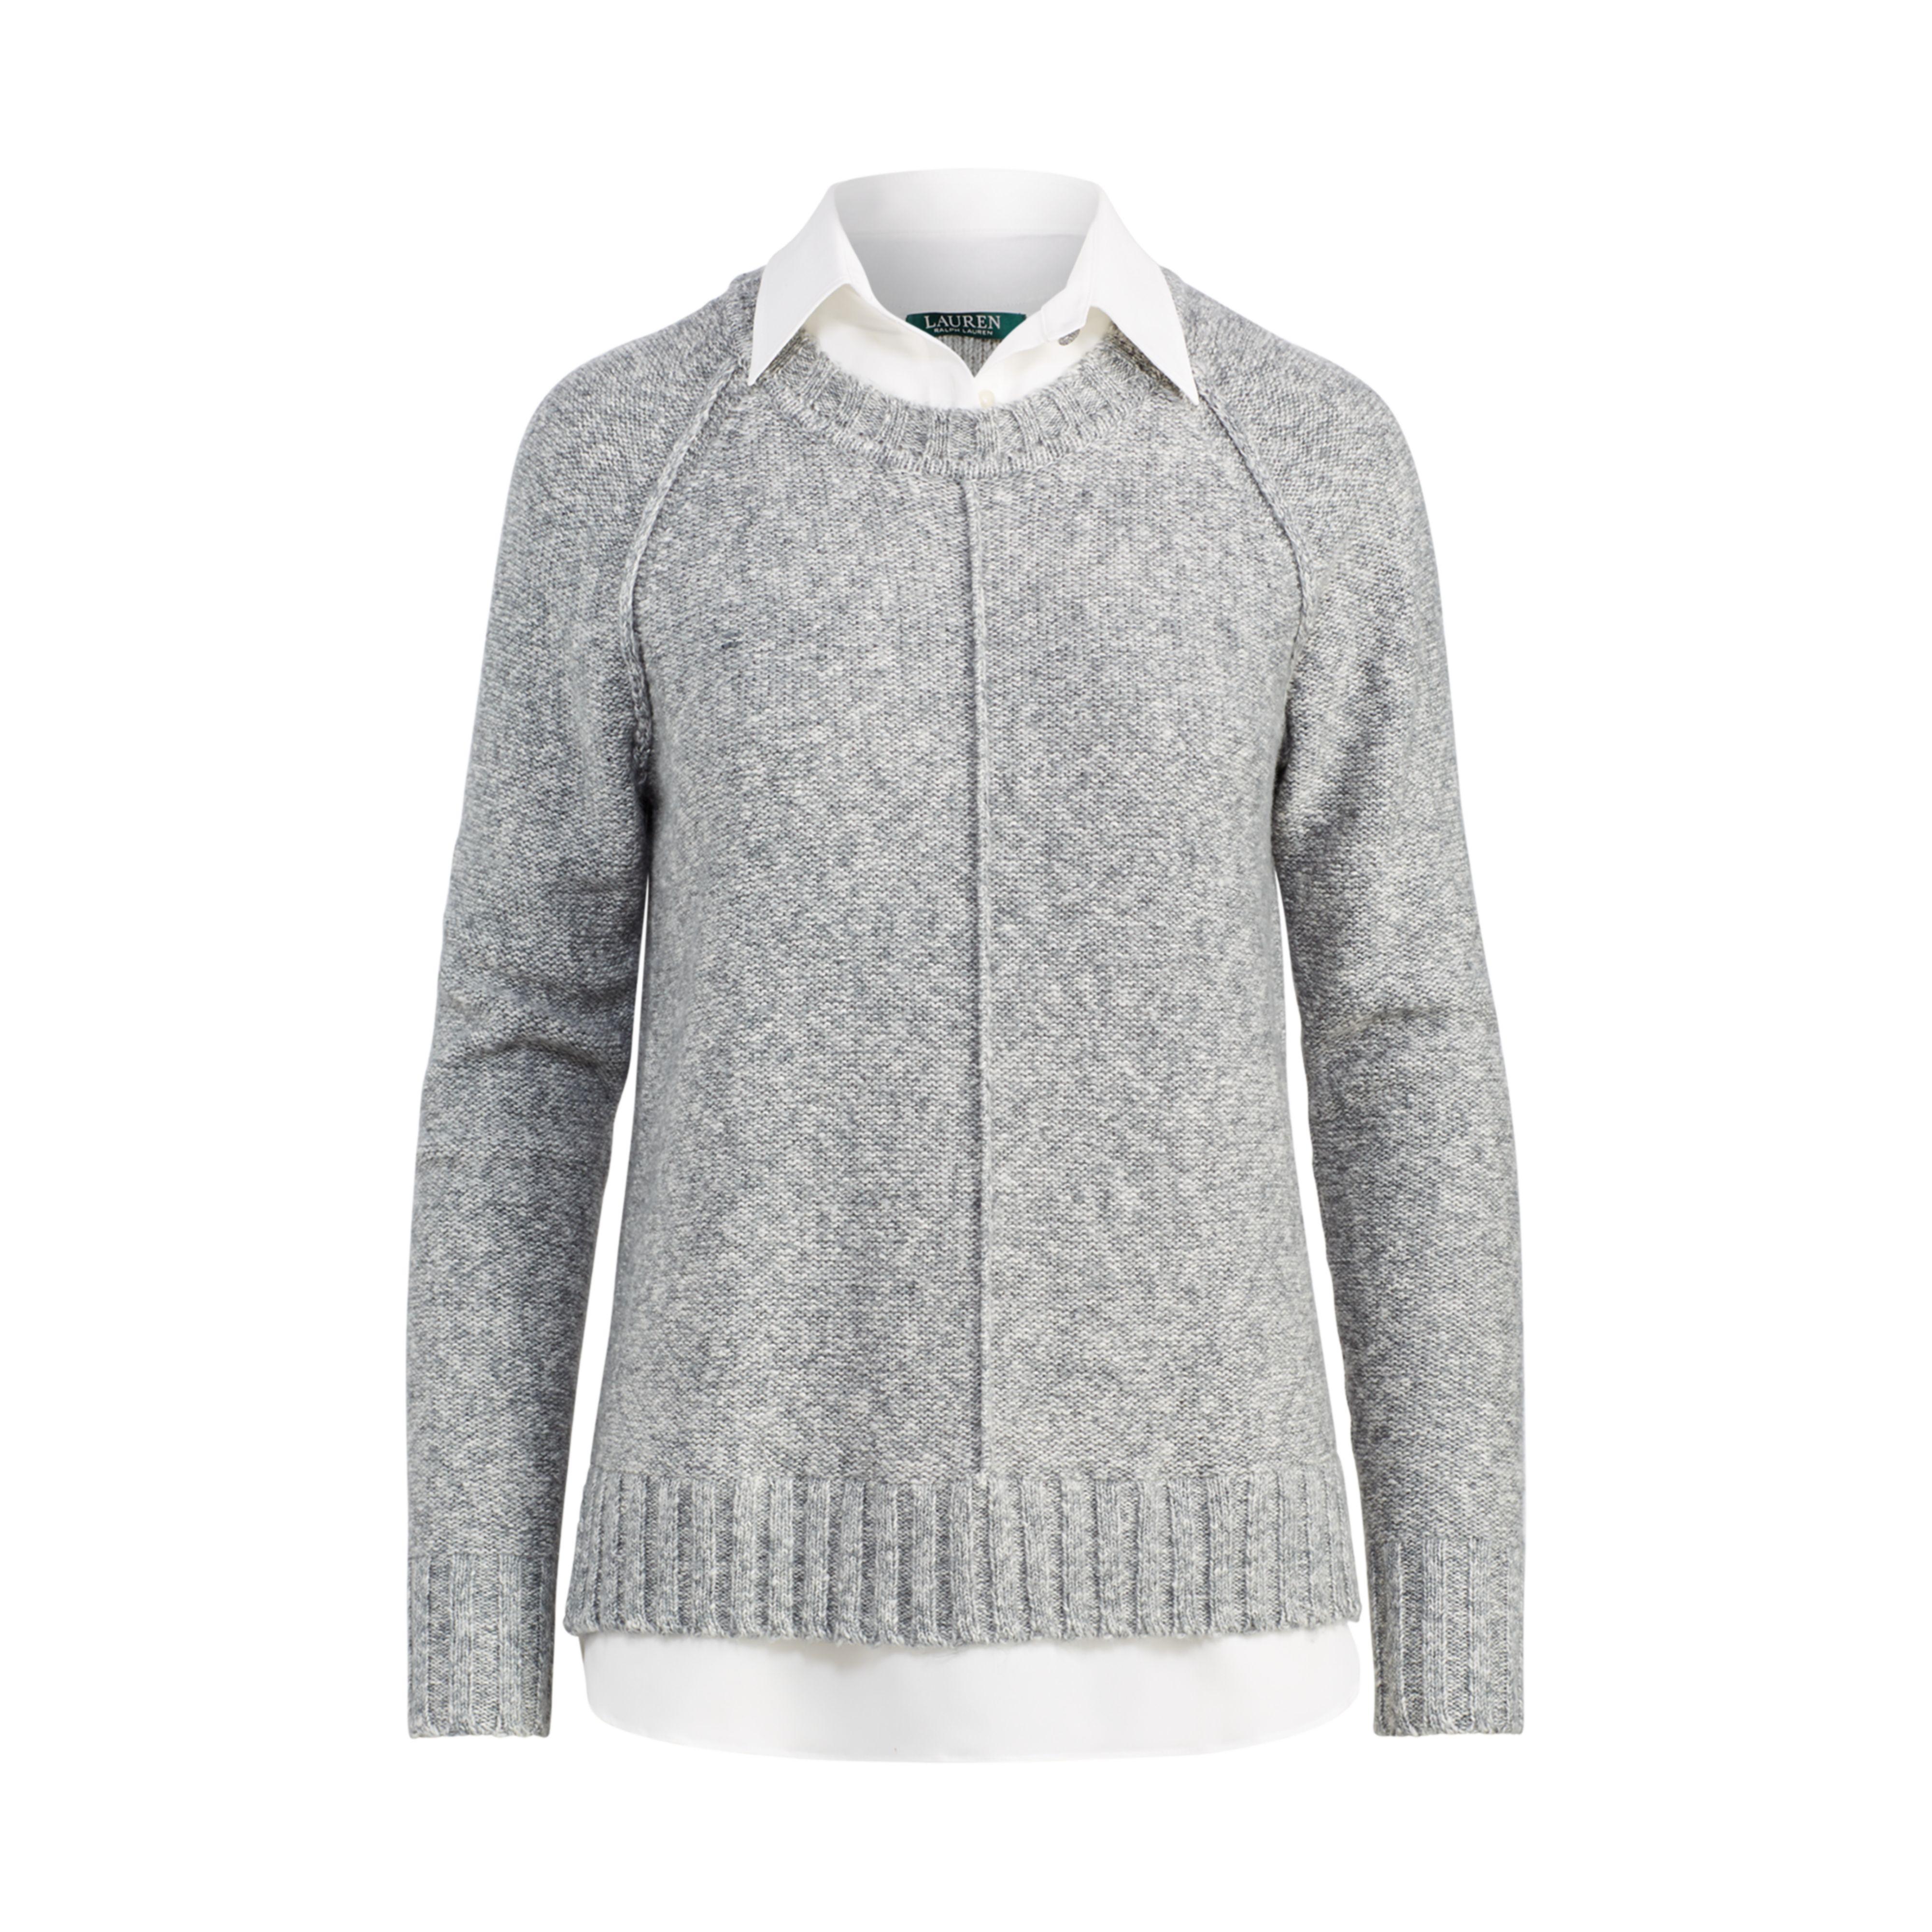 Ralph Lauren Layered Cotton-blend Sweater in Sterling Grey Heather (Gray) -  Lyst